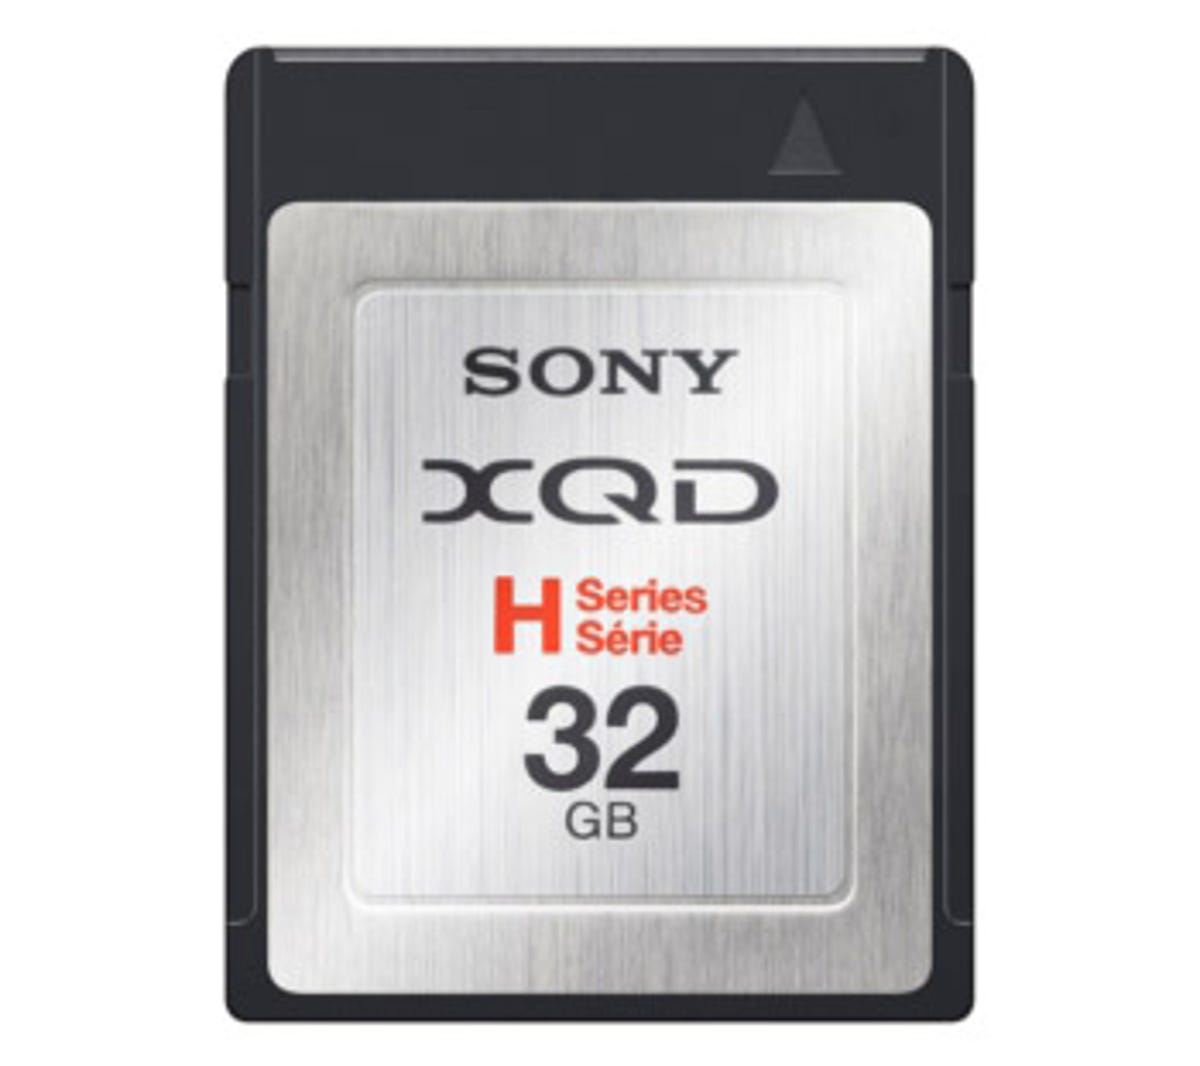 Sony's 32GB QD-H32, a XQD flash memory card, has a retail price of $229.99.